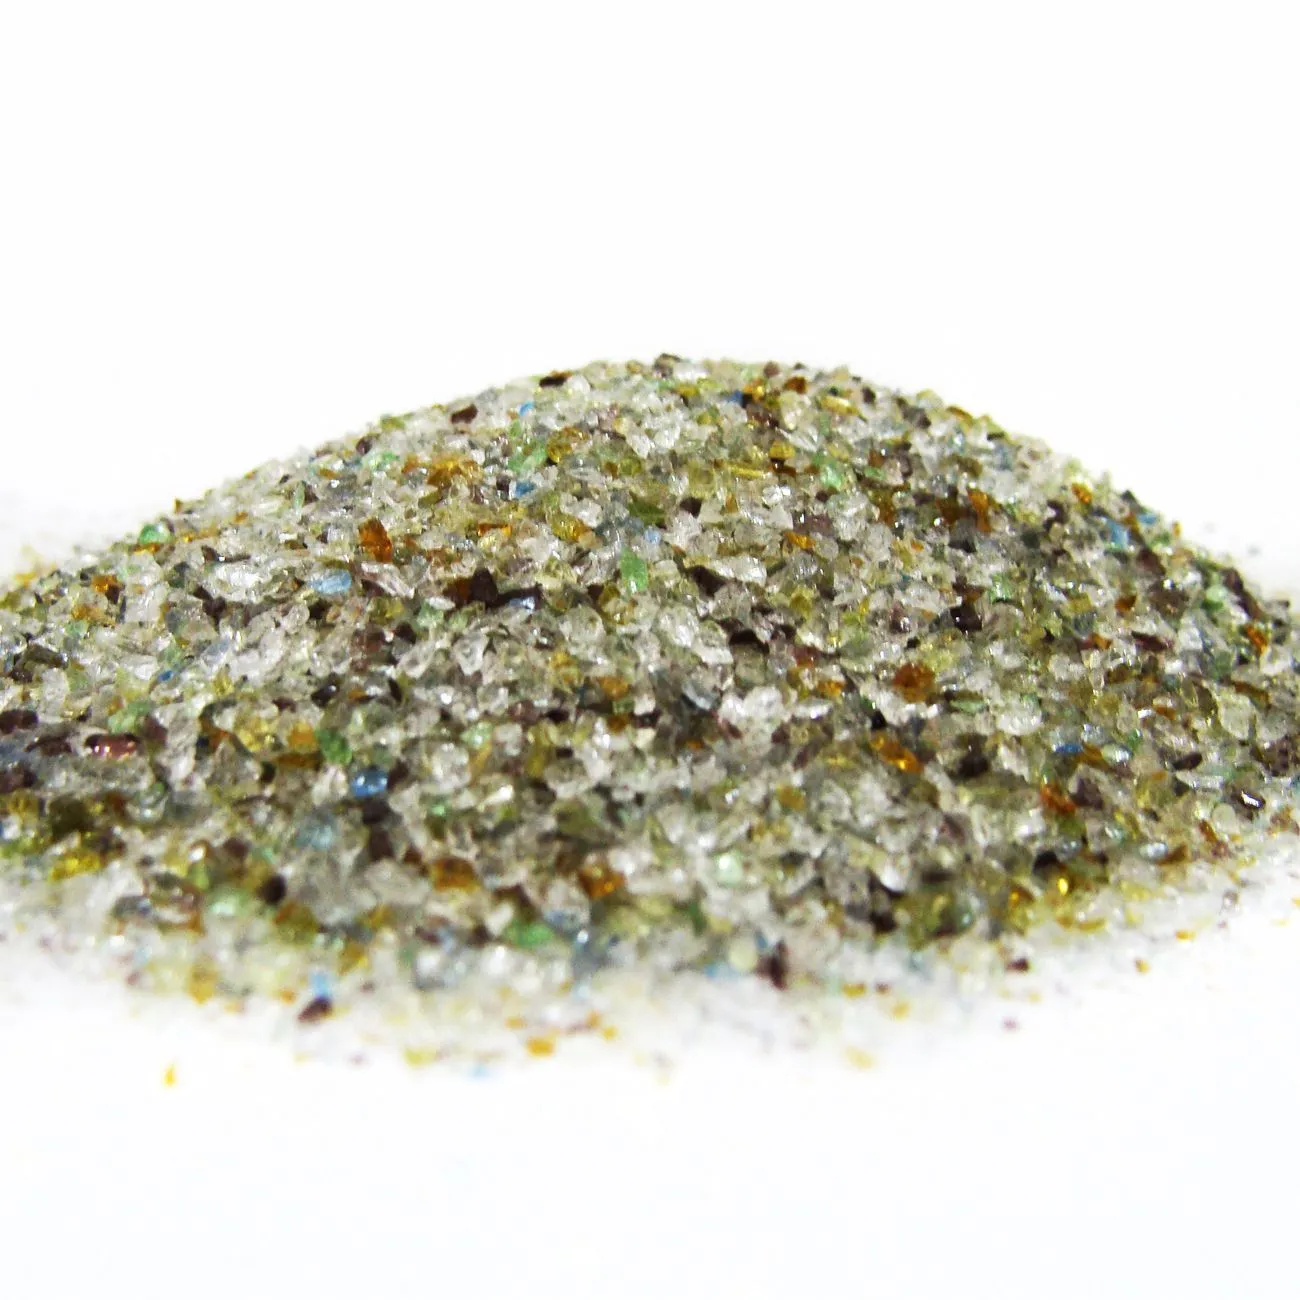 Песок стеклянный Waterco EcoPure 0.5-1.0 мм (20 кг) от магазина gidro-z